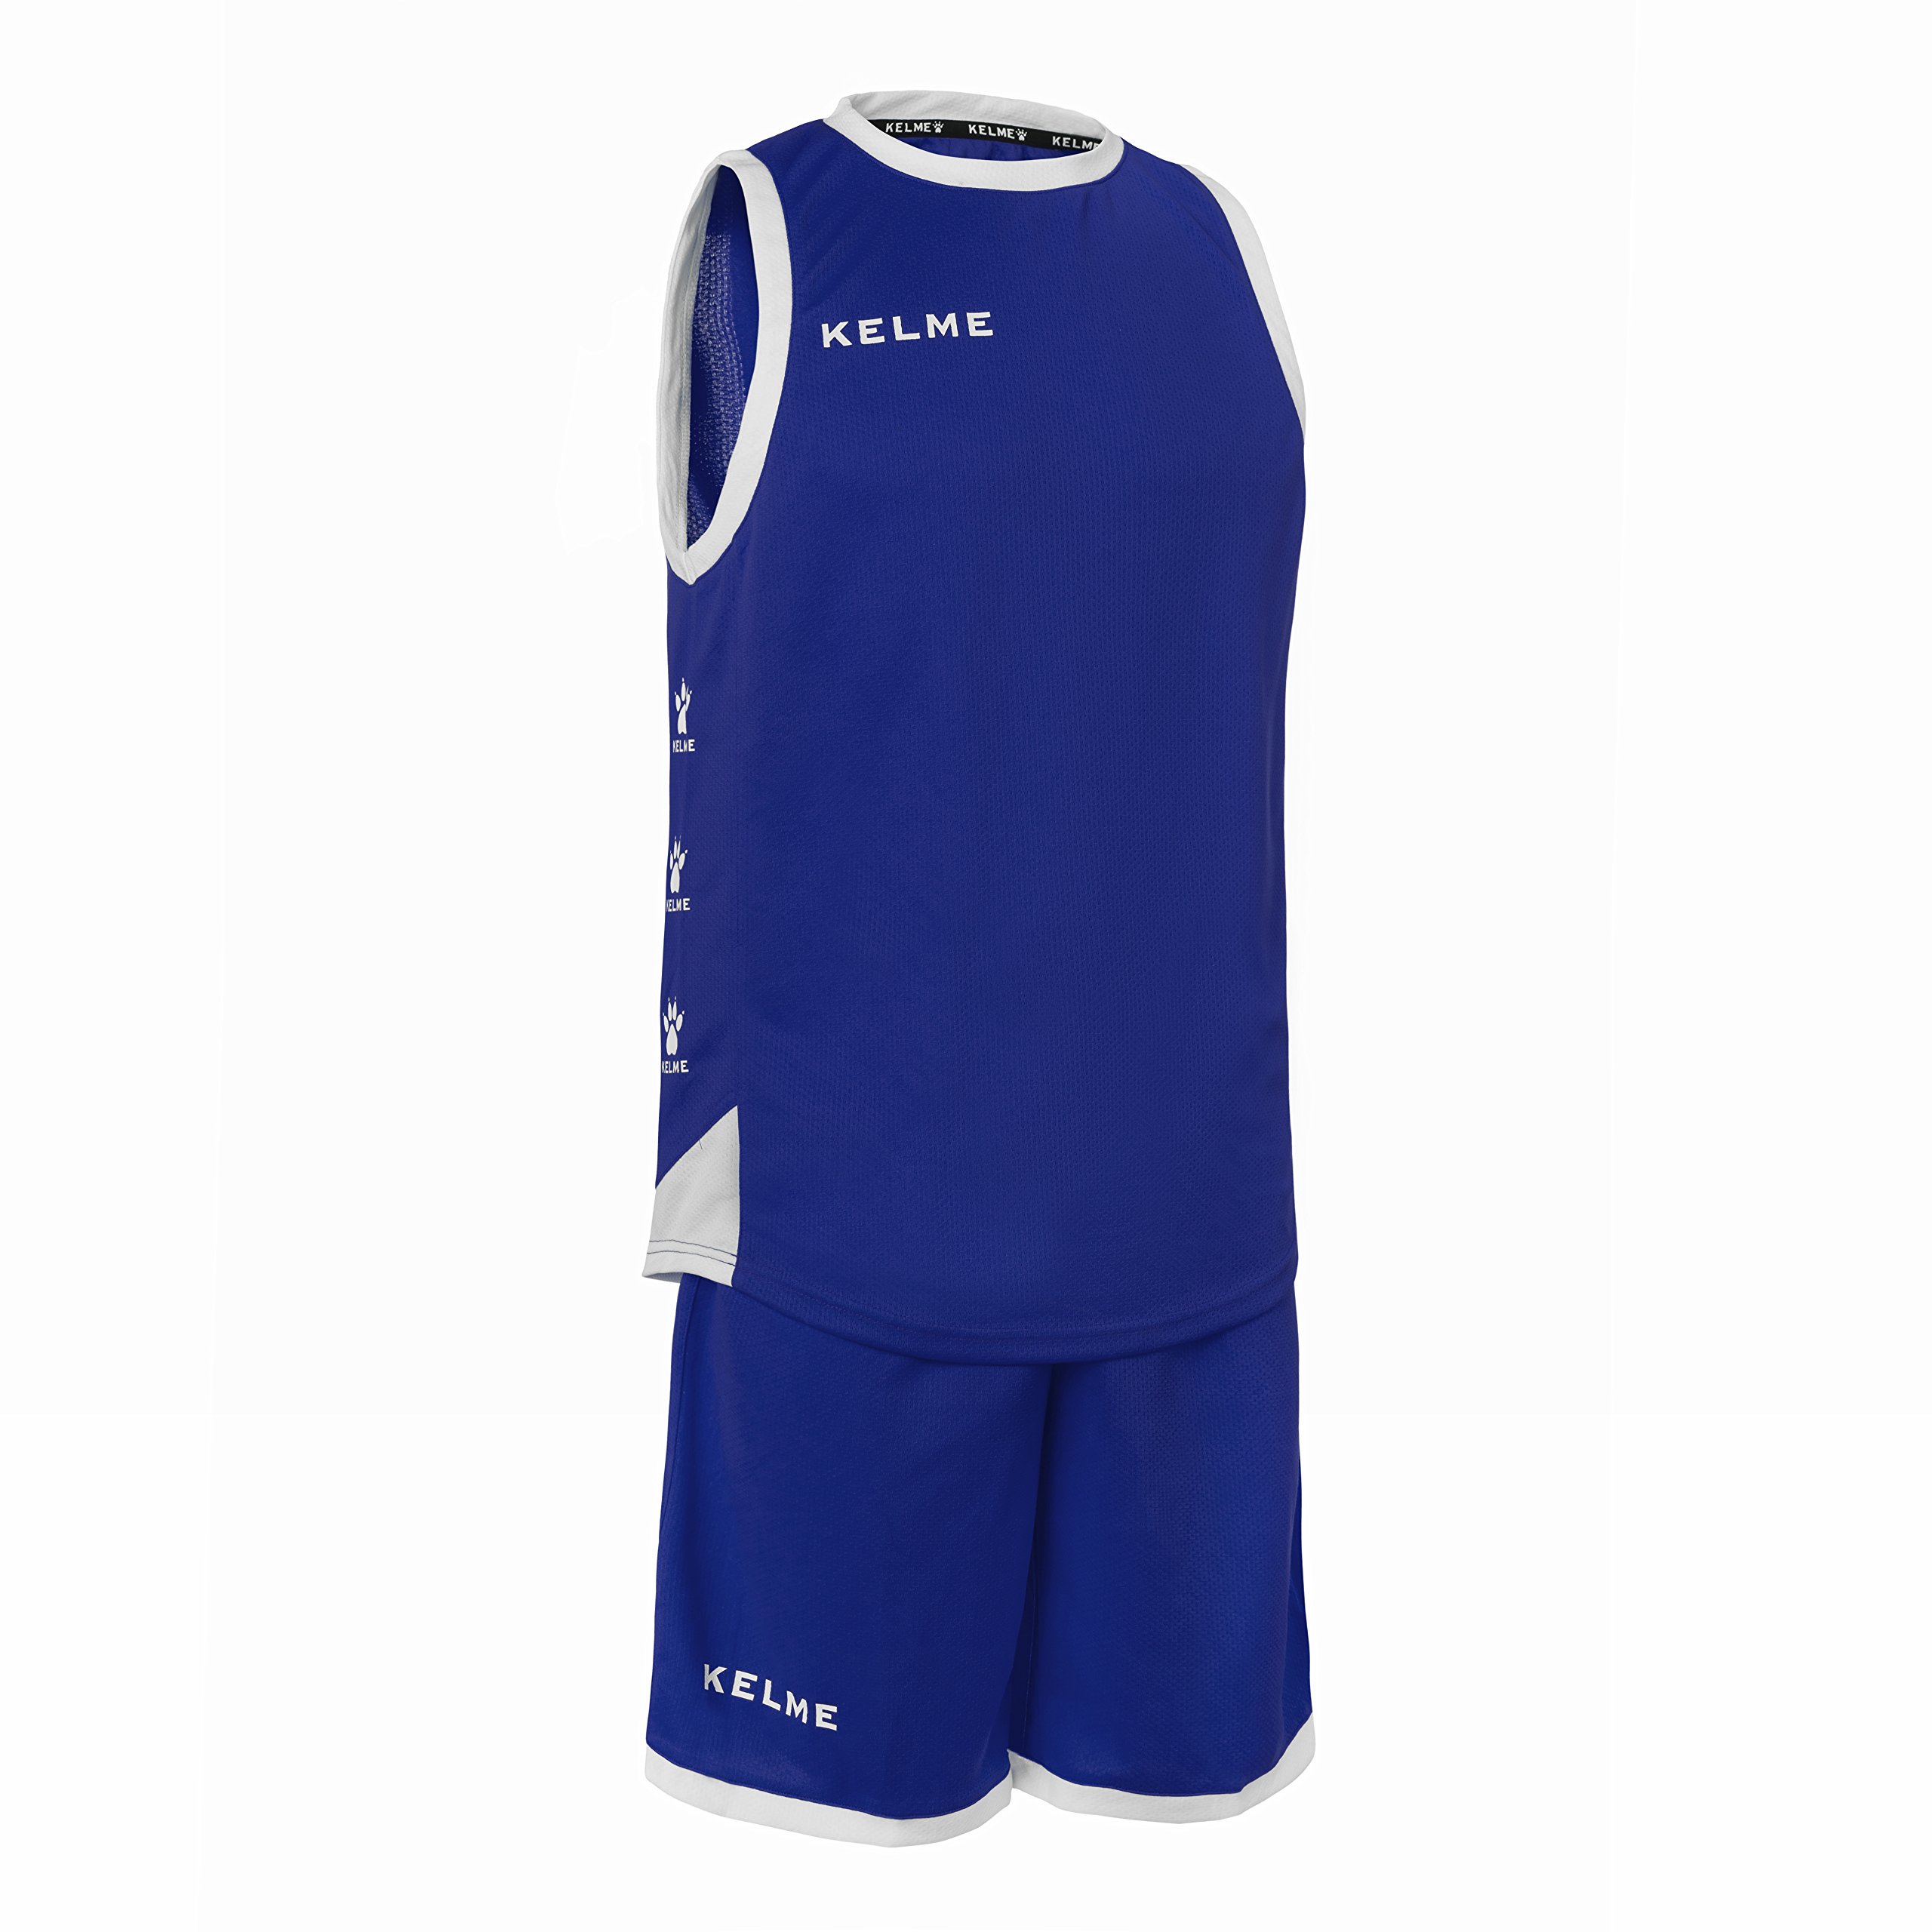 KELME 80803 - Basketball-Set Kinder XXL Blau (Royal)/Weiß